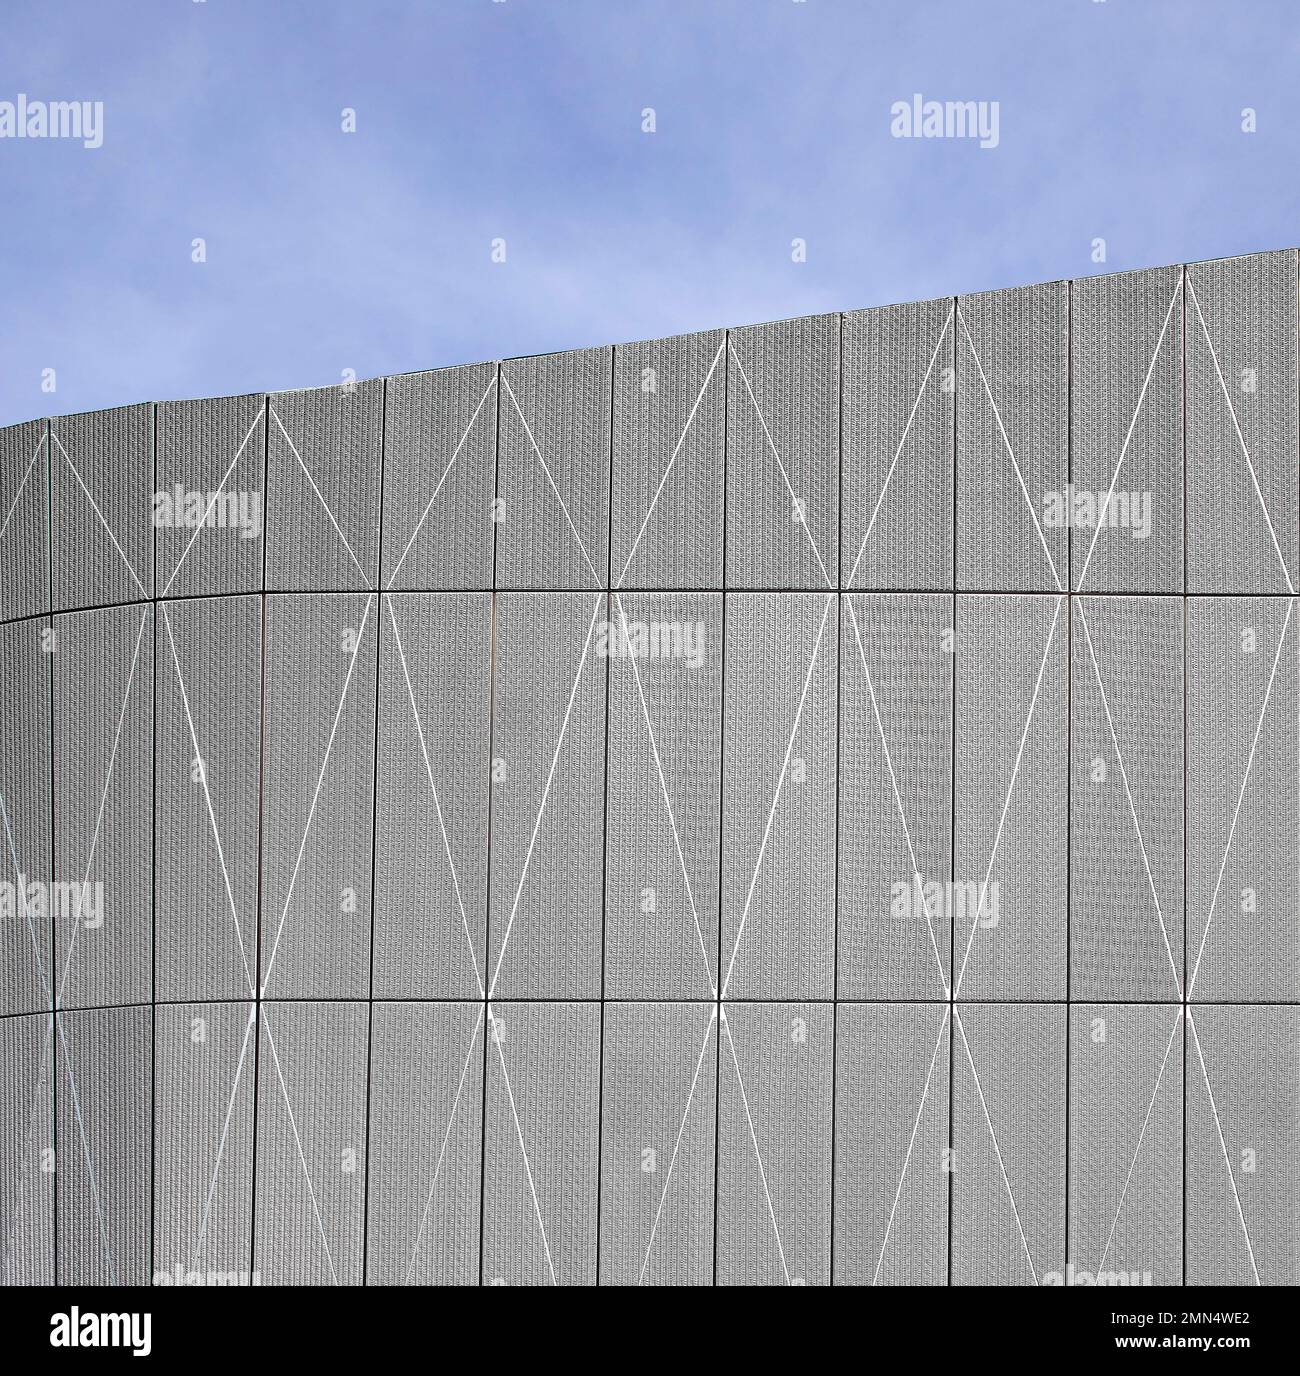 Aluminium mesh cladding of exterior facade. F51 Skatepark, Folkestone, United Kingdom. Architect: Hollaway Studio, 2022. Stock Photo